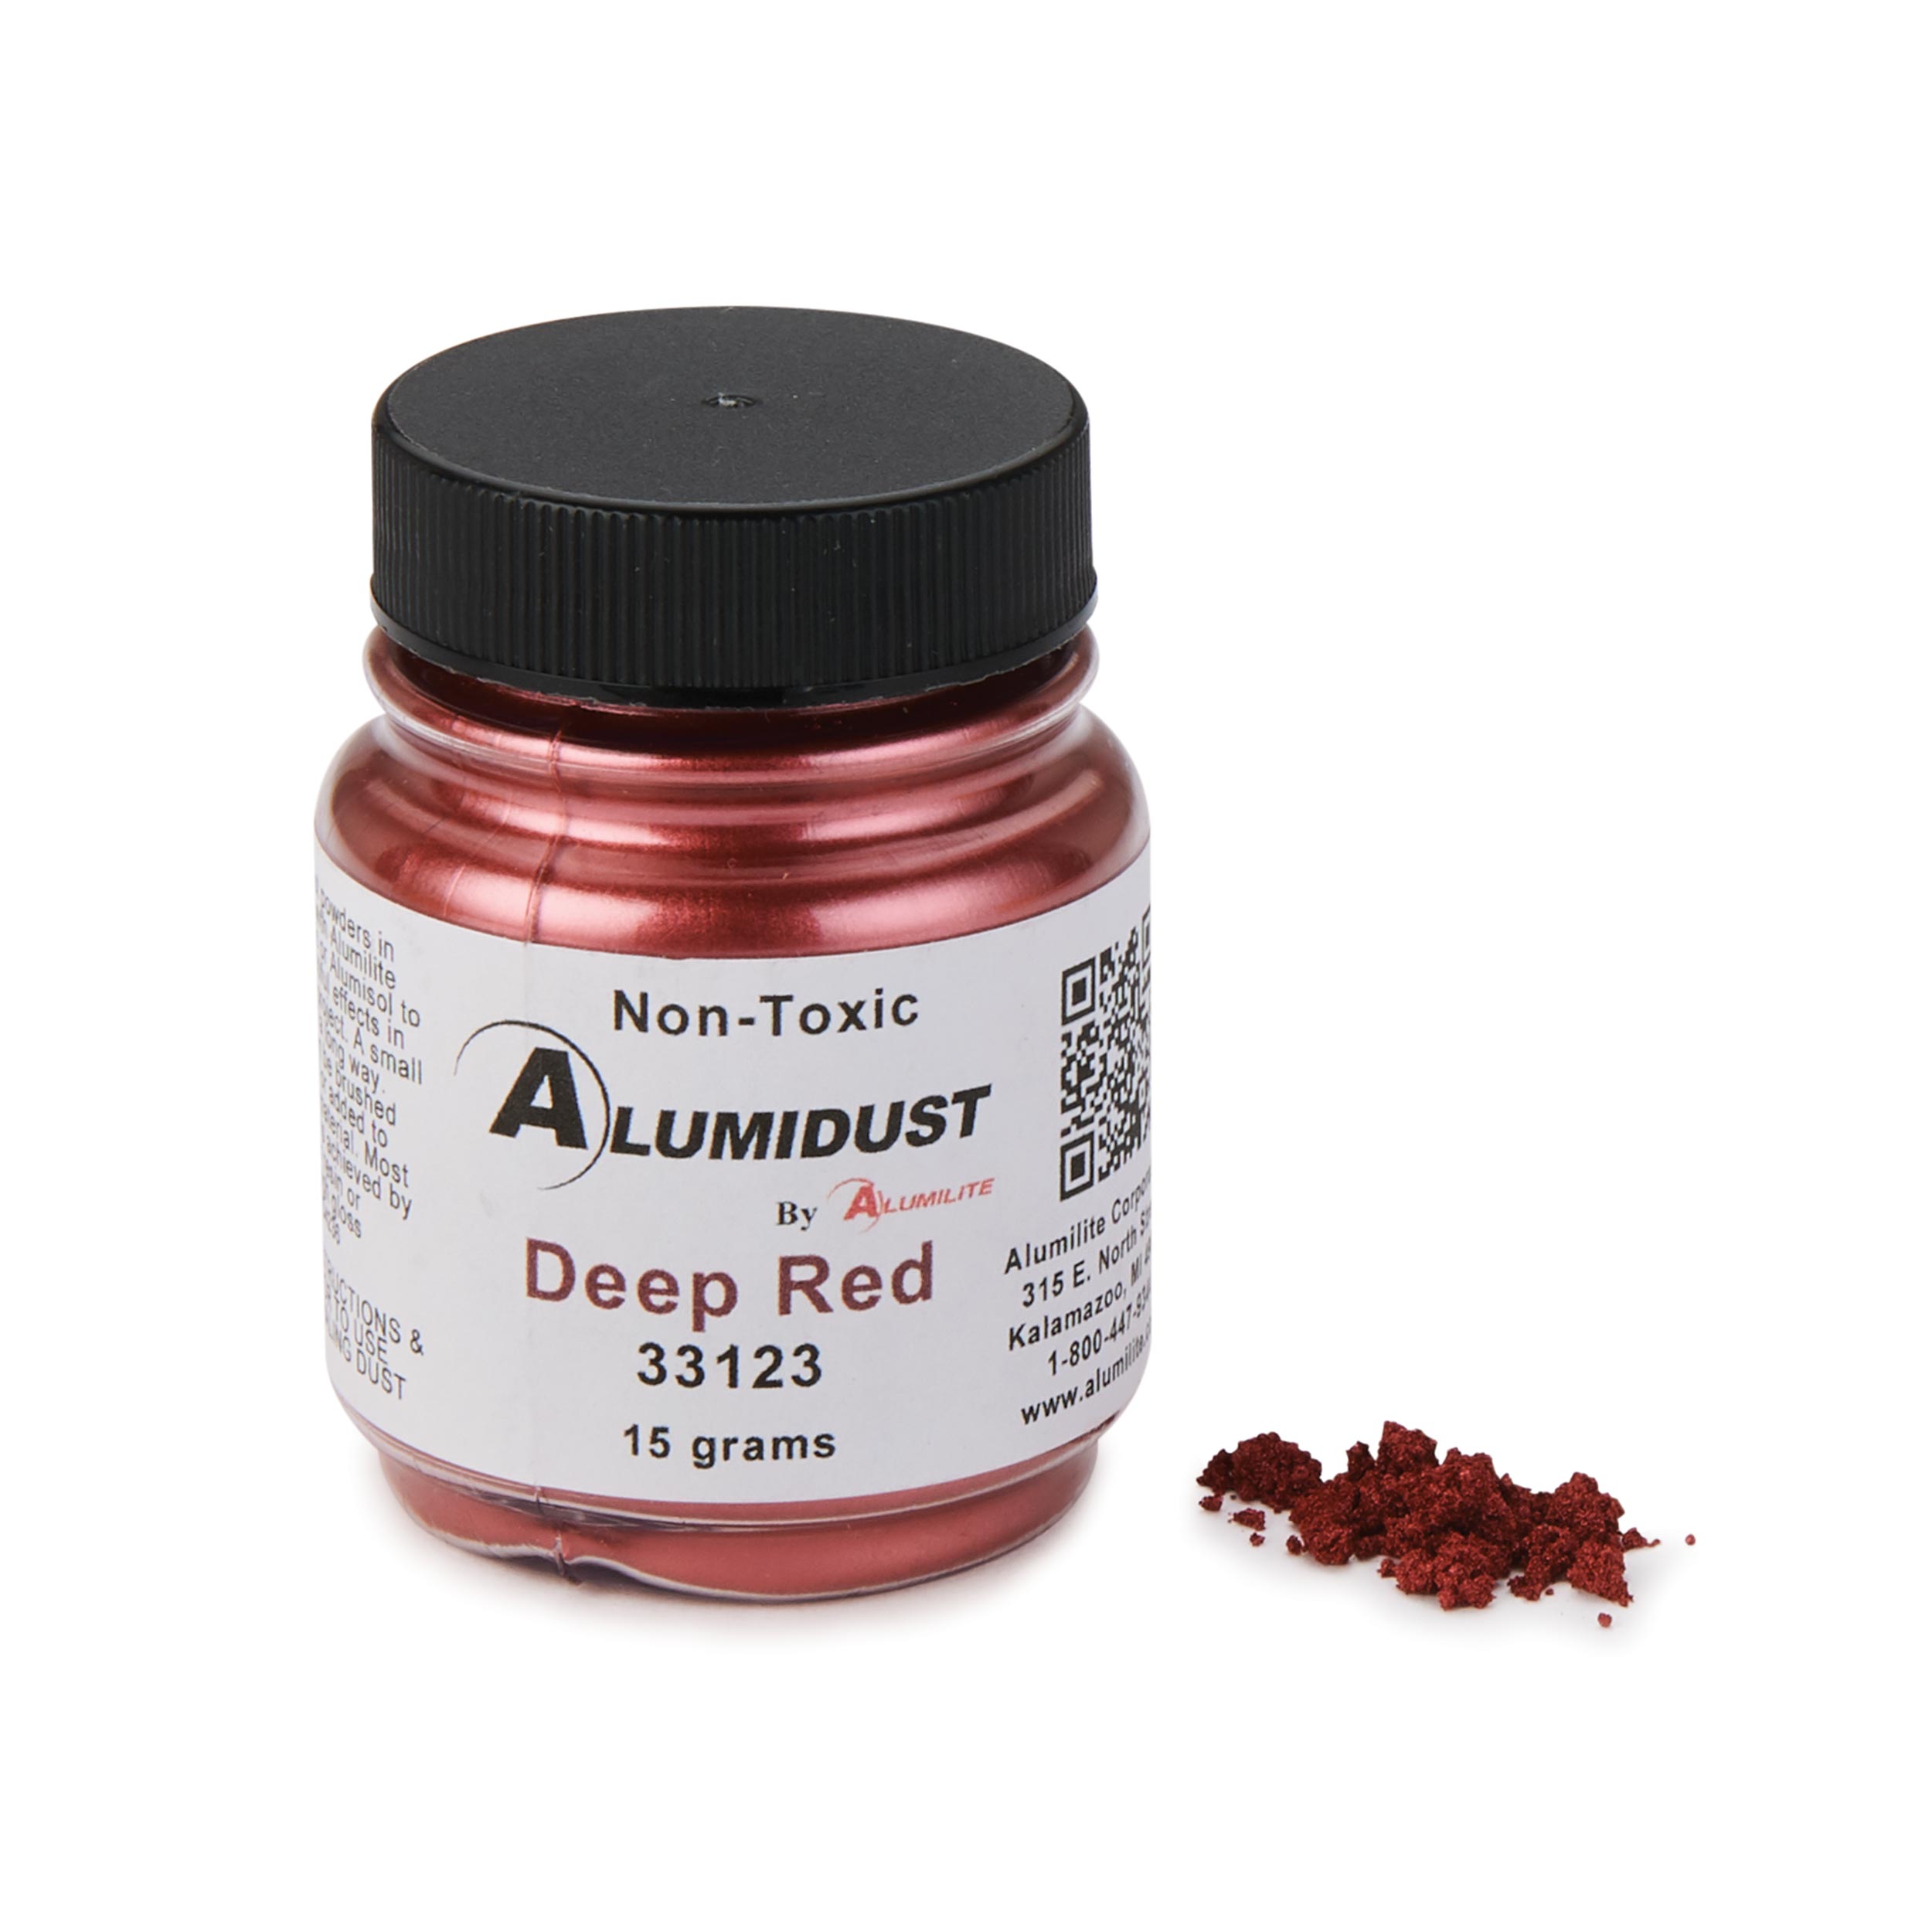 Alumidust Deep Red 15gram